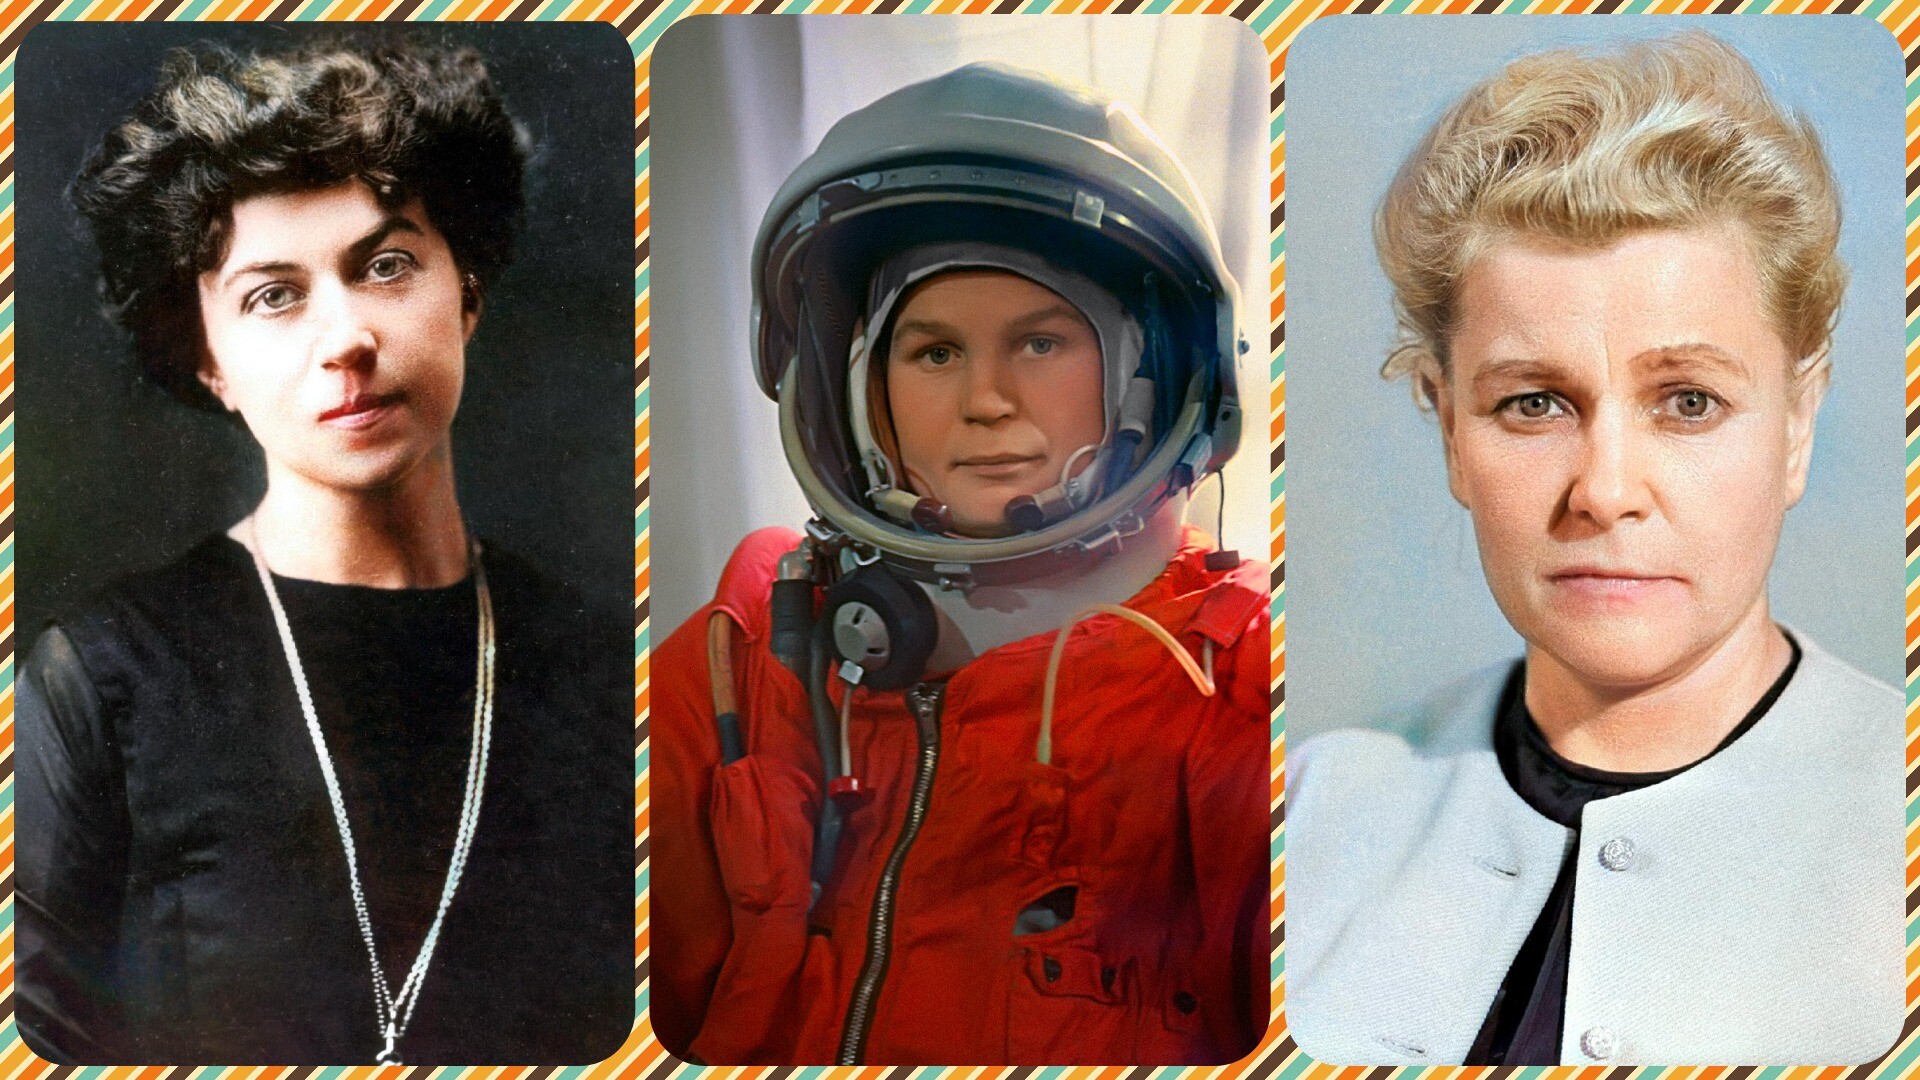 Pictured L-R: Alexandra Kollontai, Valentina Tereshkova, Yekaterina Furtseva